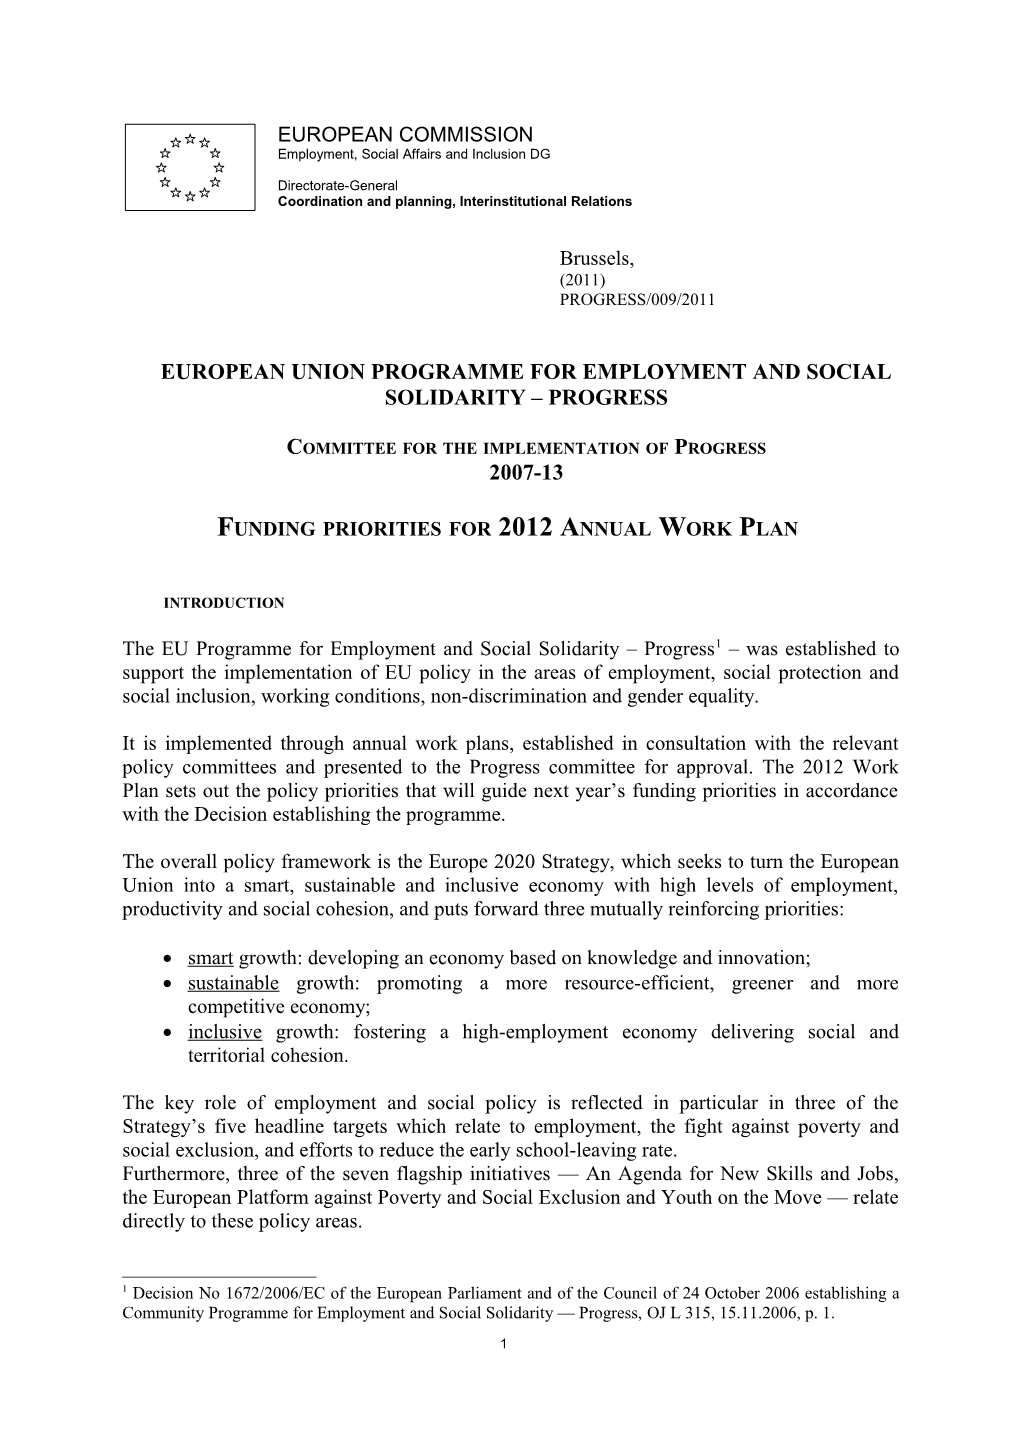 Funding Priorities for 2012 Annual Work Plan